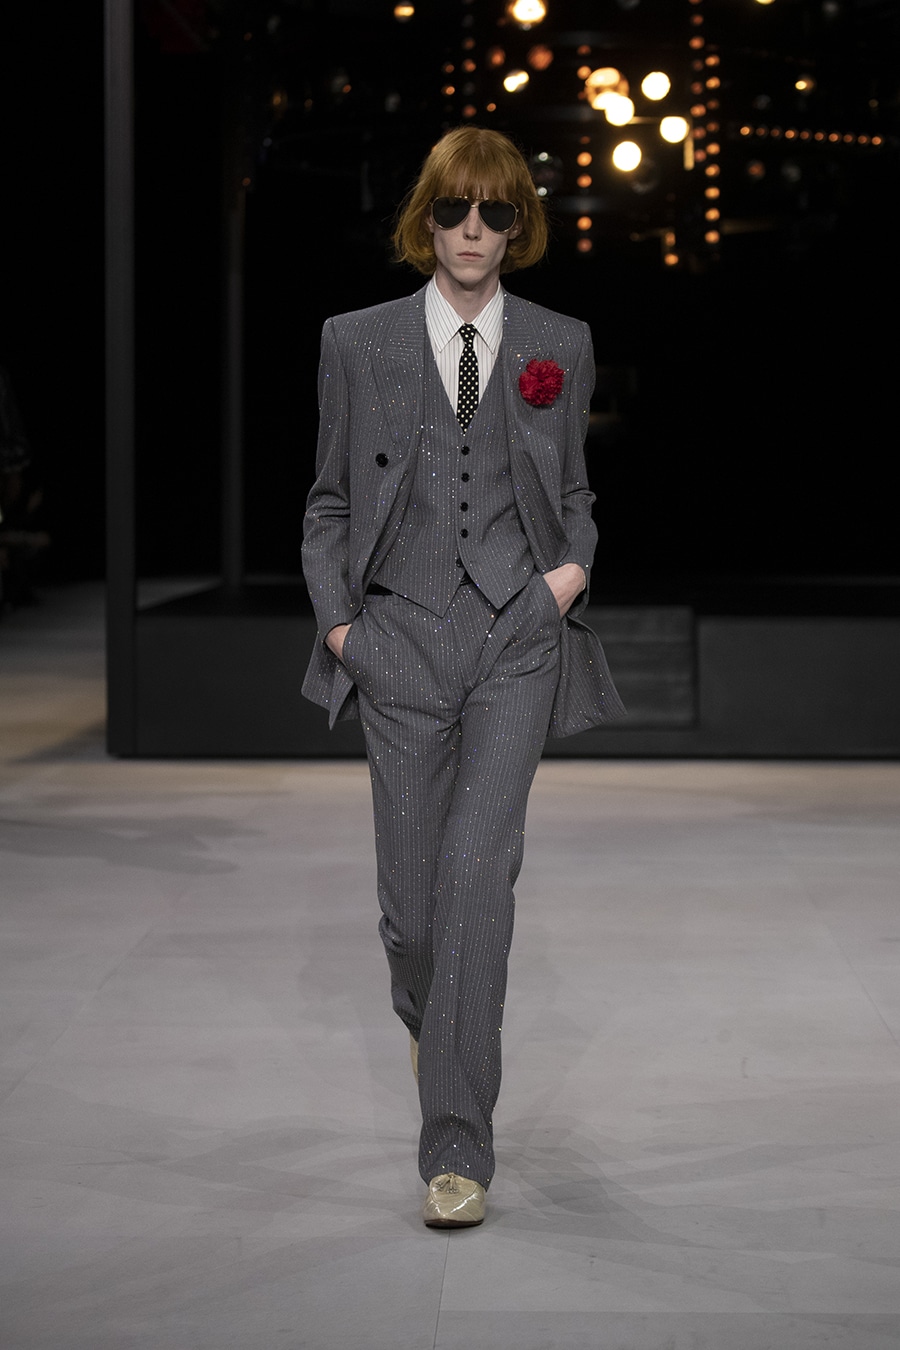 Model in shiny Pinstripe Suit